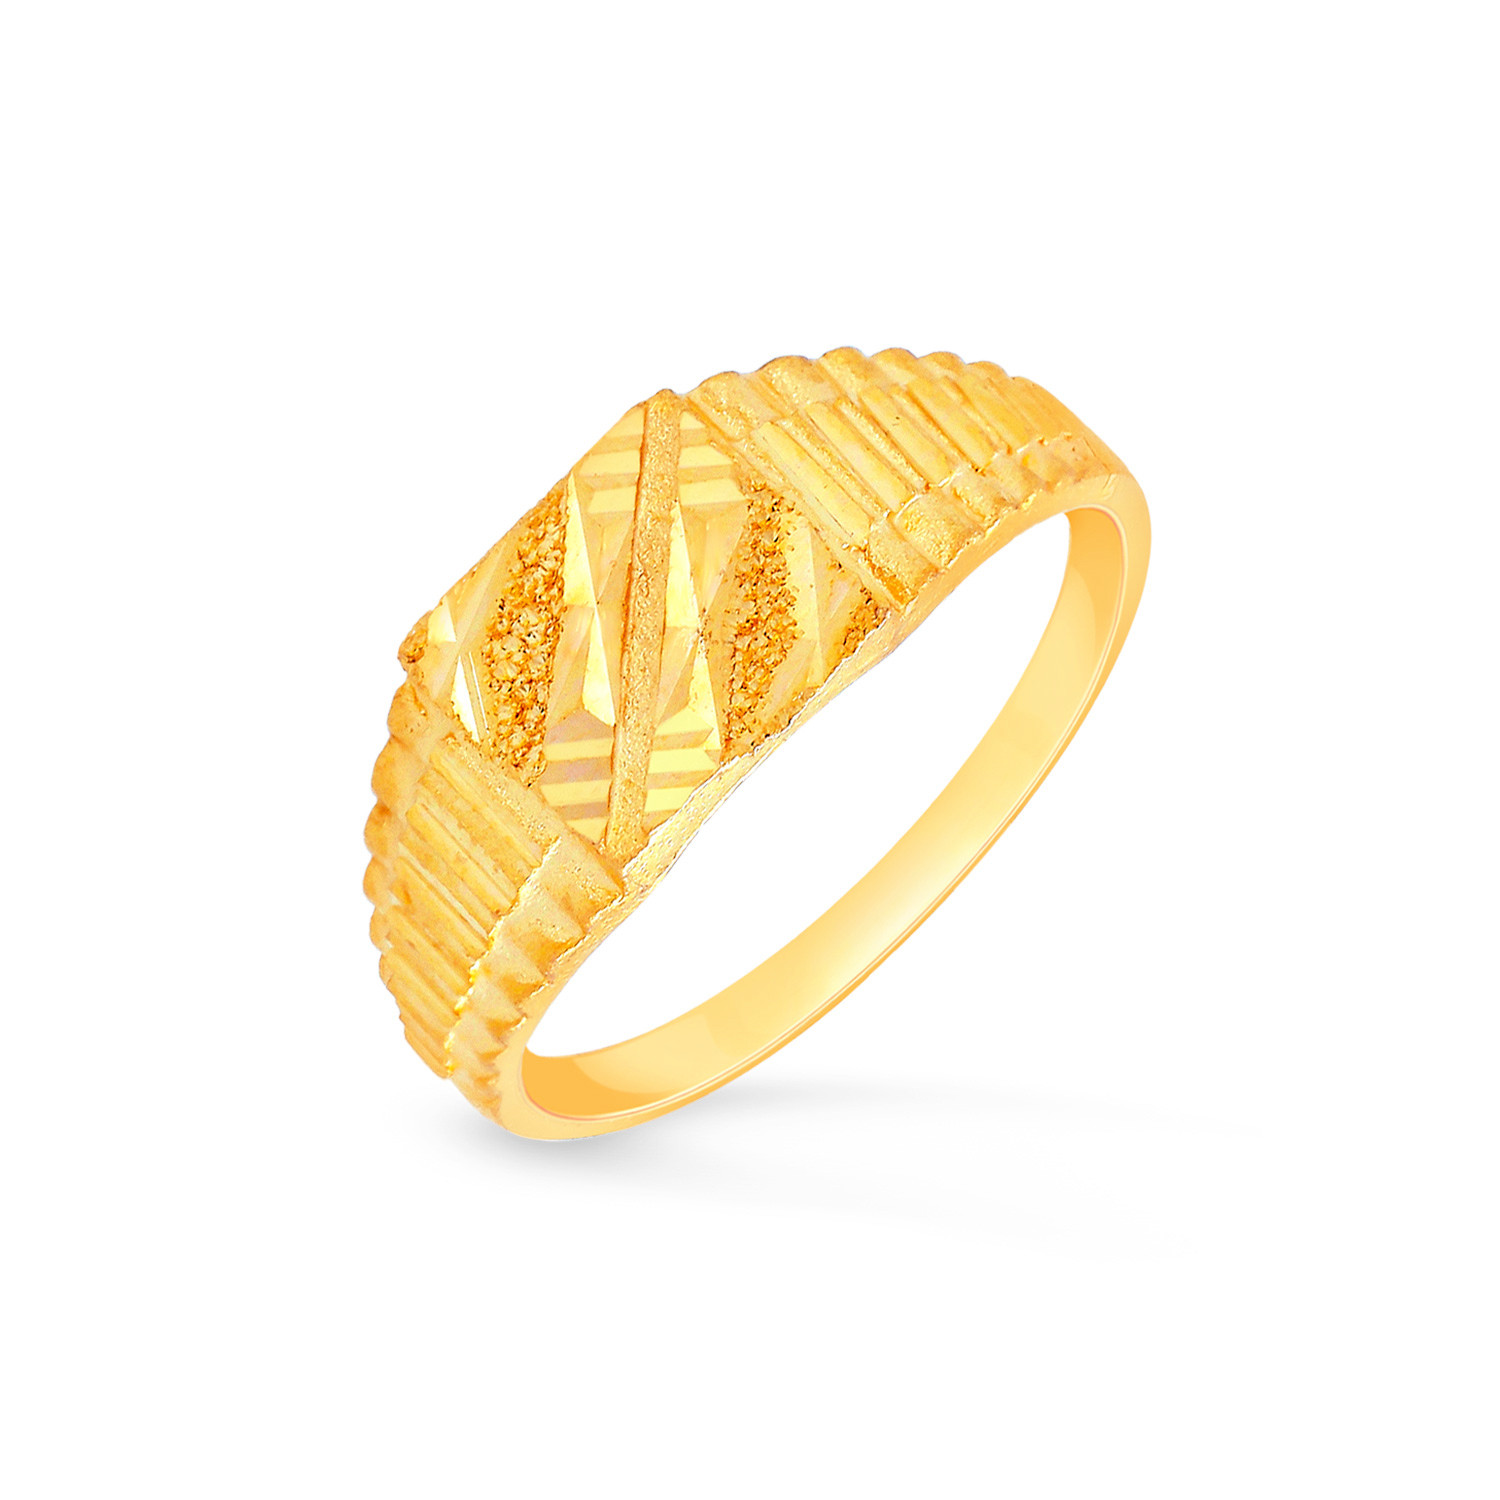 Malabar Gold and Diamonds 22k Yellow Gold Ring : Amazon.in: Jewellery